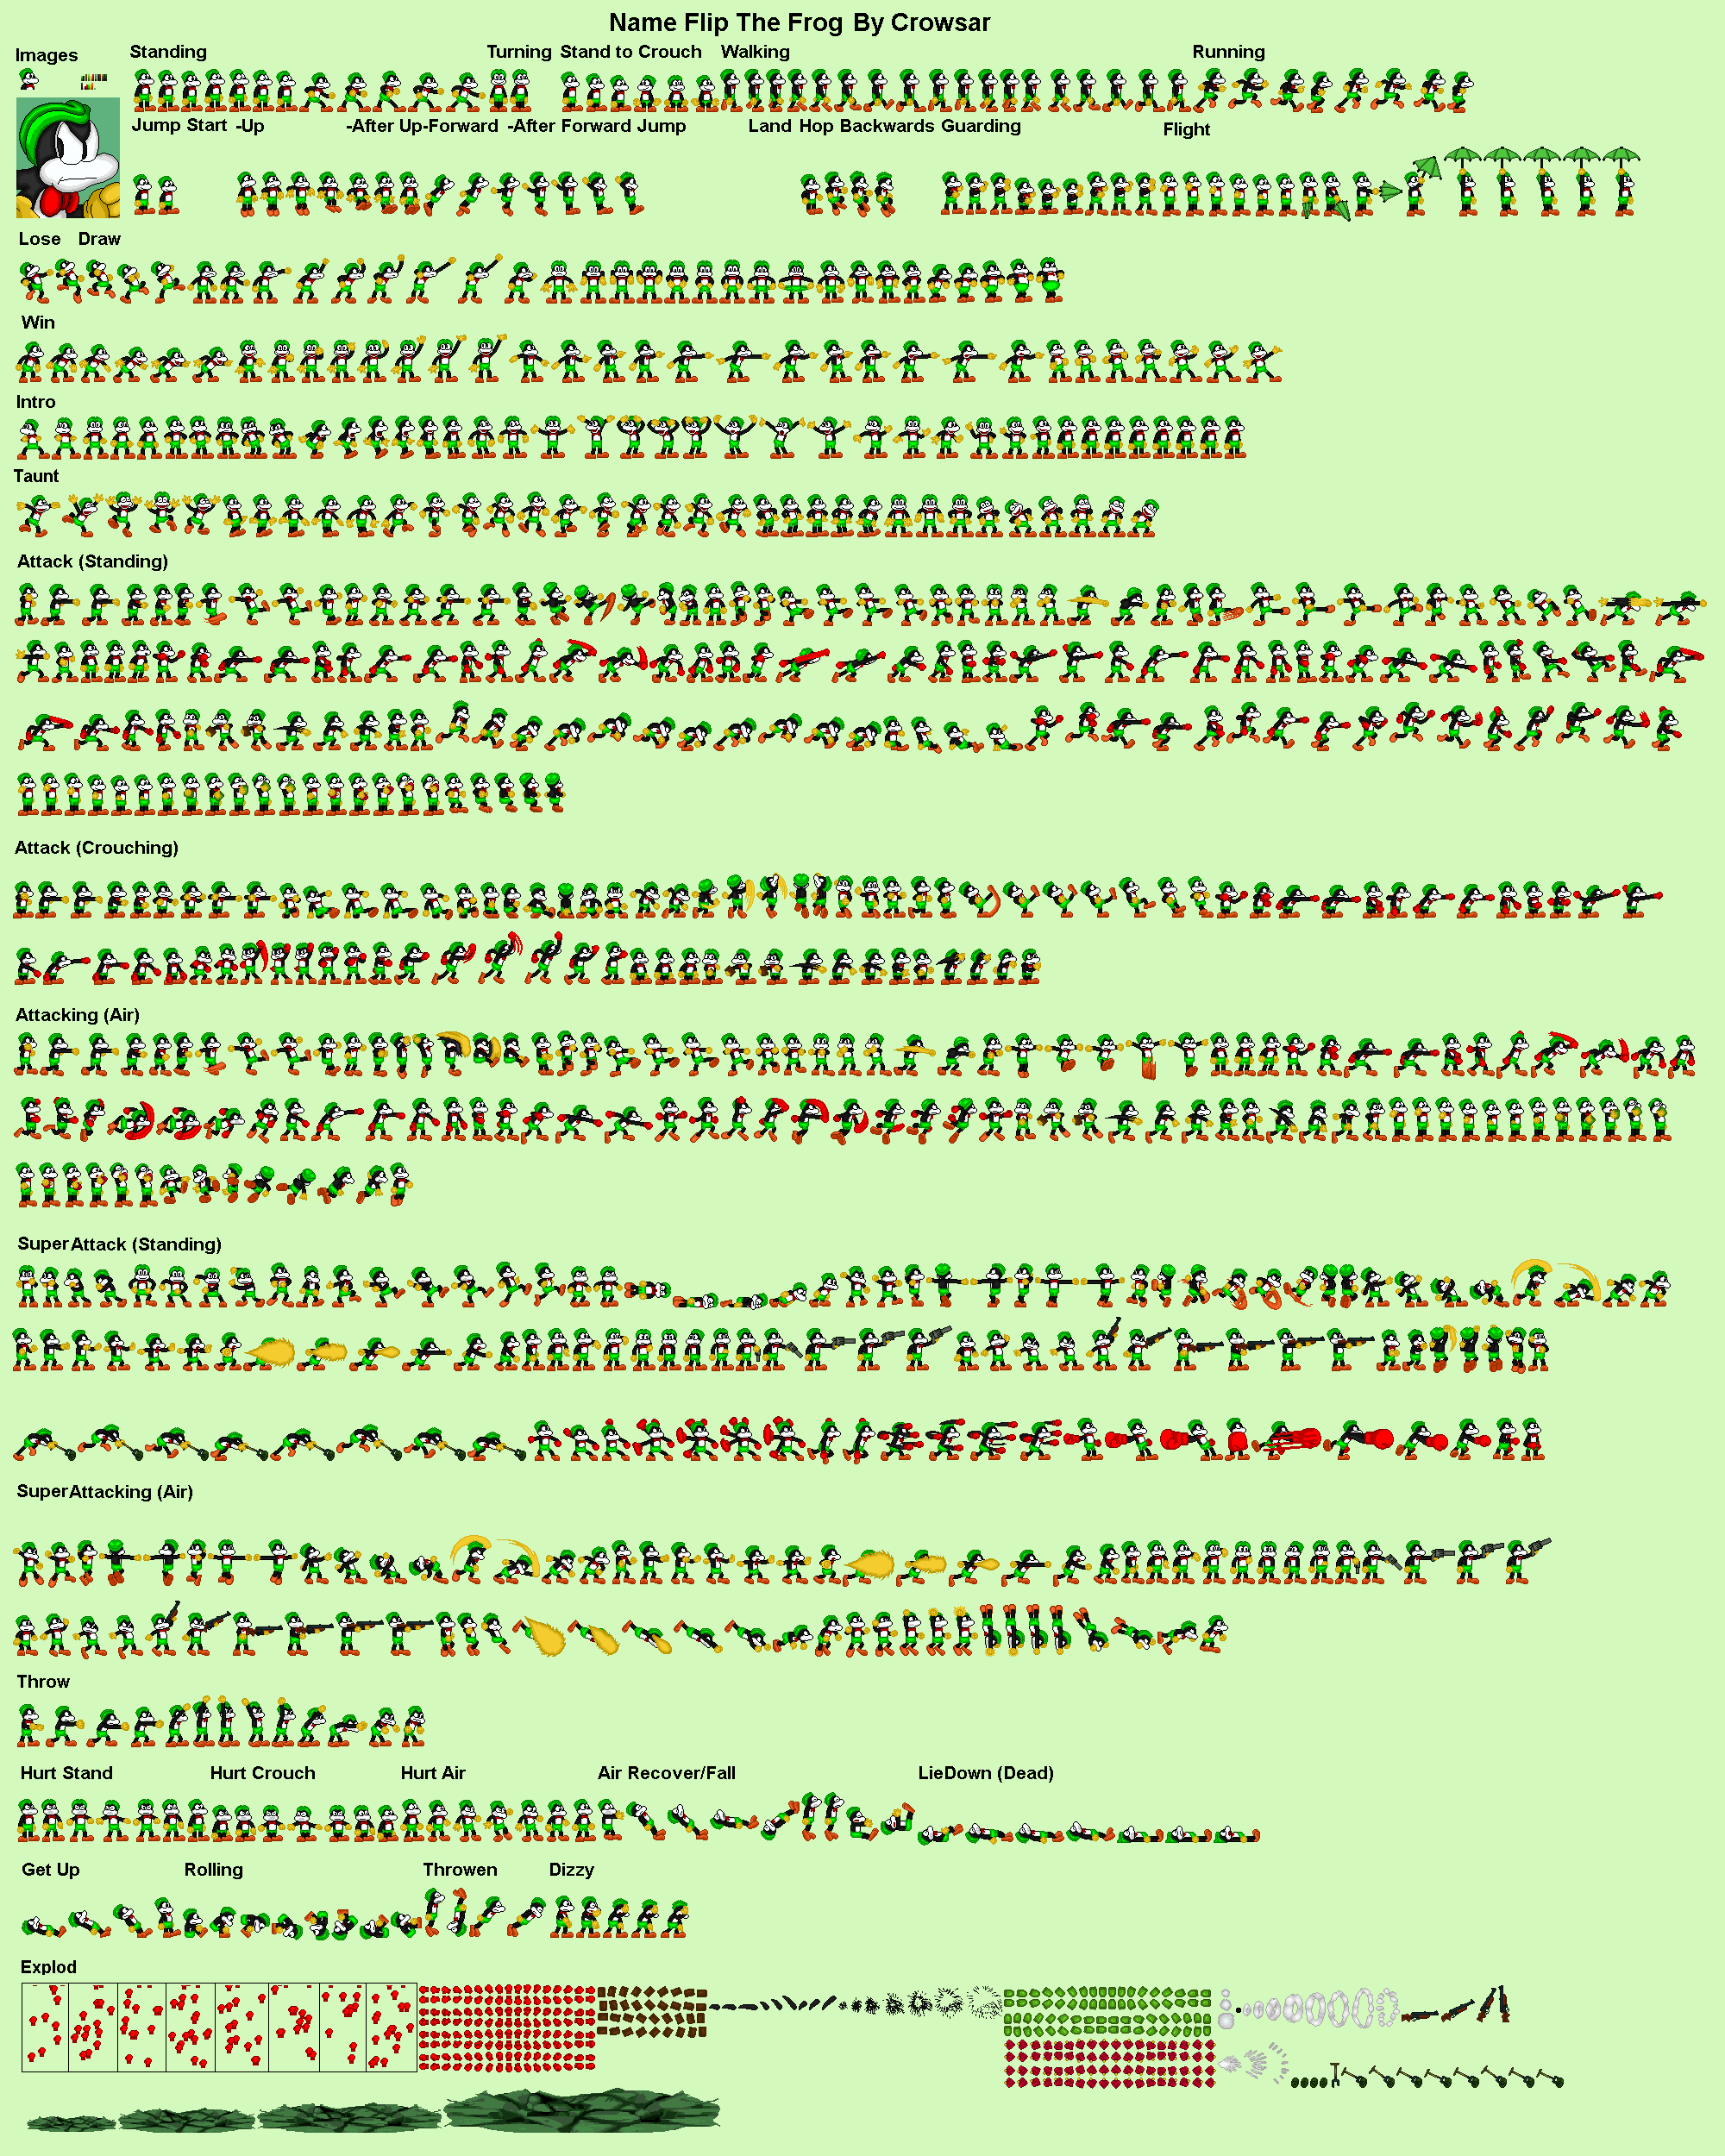 Original) Super Tails Sprite Sheet by JayHyperStarX on DeviantArt